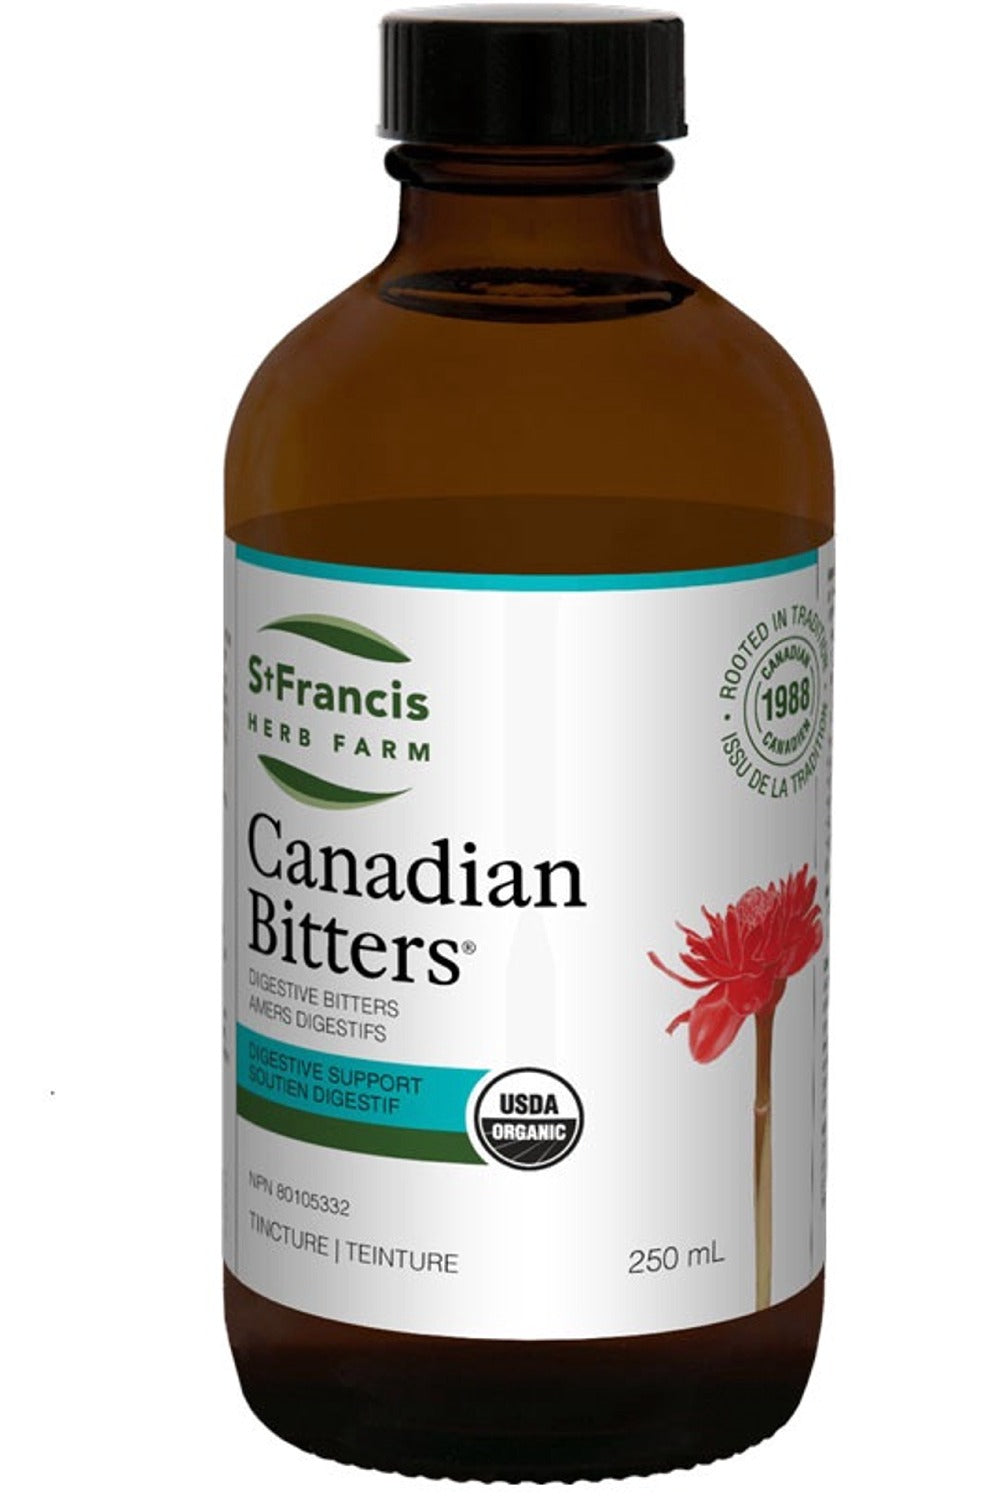 ST FRANCIS HERB FARM Canadian Bitters (250 ml)